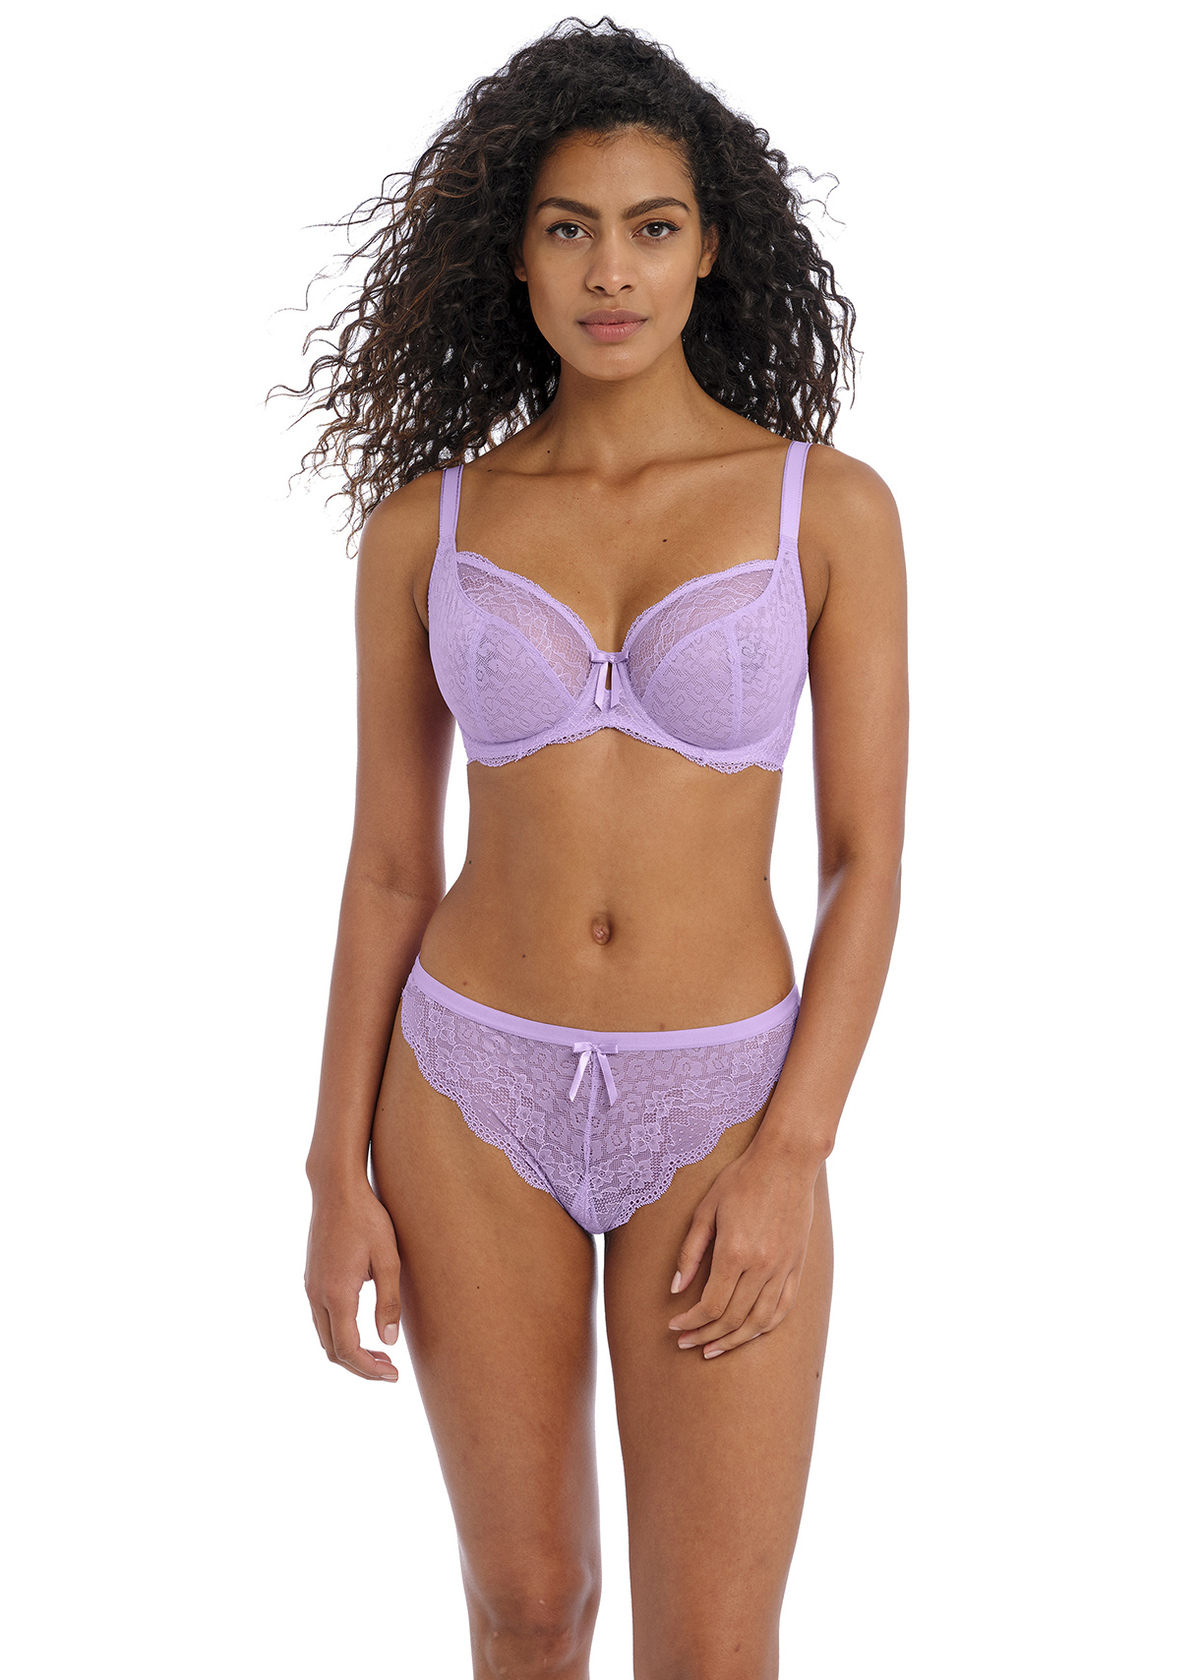 http://www.bodybeautifullingerie.co.uk/images/current-lingerie/Freya-Lingerie-Continuous/Freya-Fancies-Purple-Rose/Freya-Fancies-Plunge-Bra-Brazilian-Purple-Large.jpg